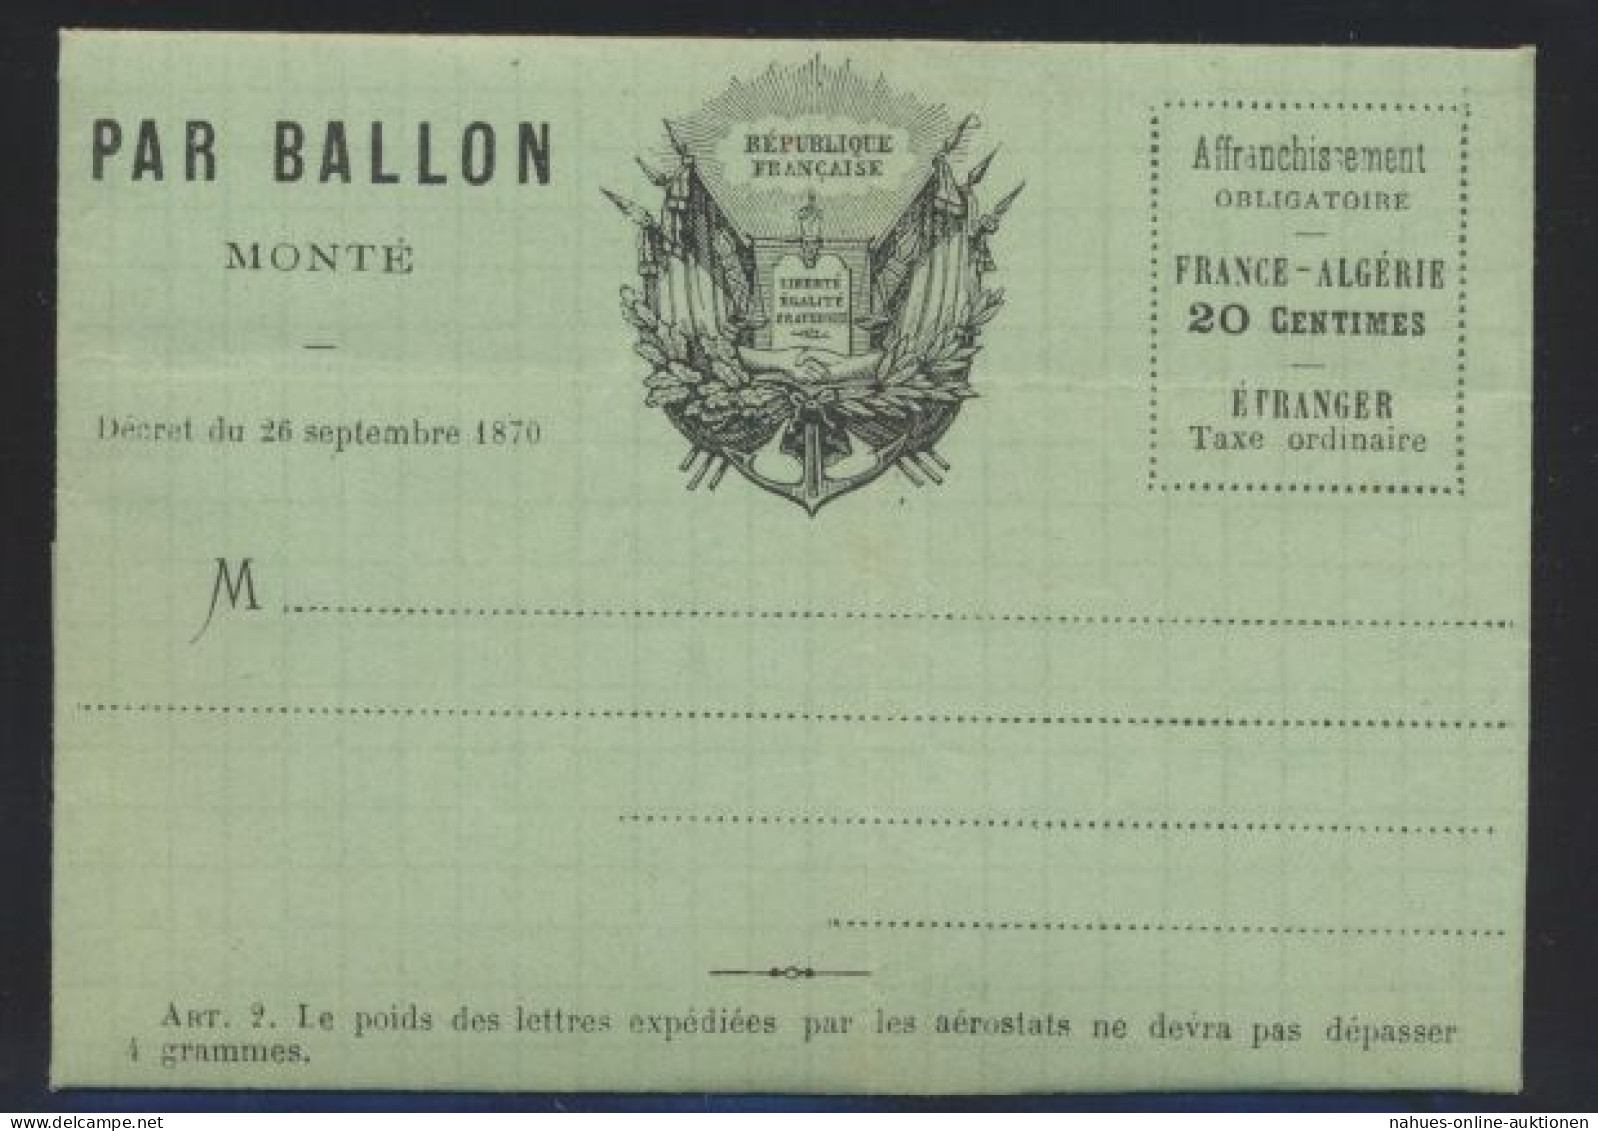 Flugpost Air Mail Ballonpost Ballon Monte Frankreich France 20 C. Faltbrief Von - Covers & Documents